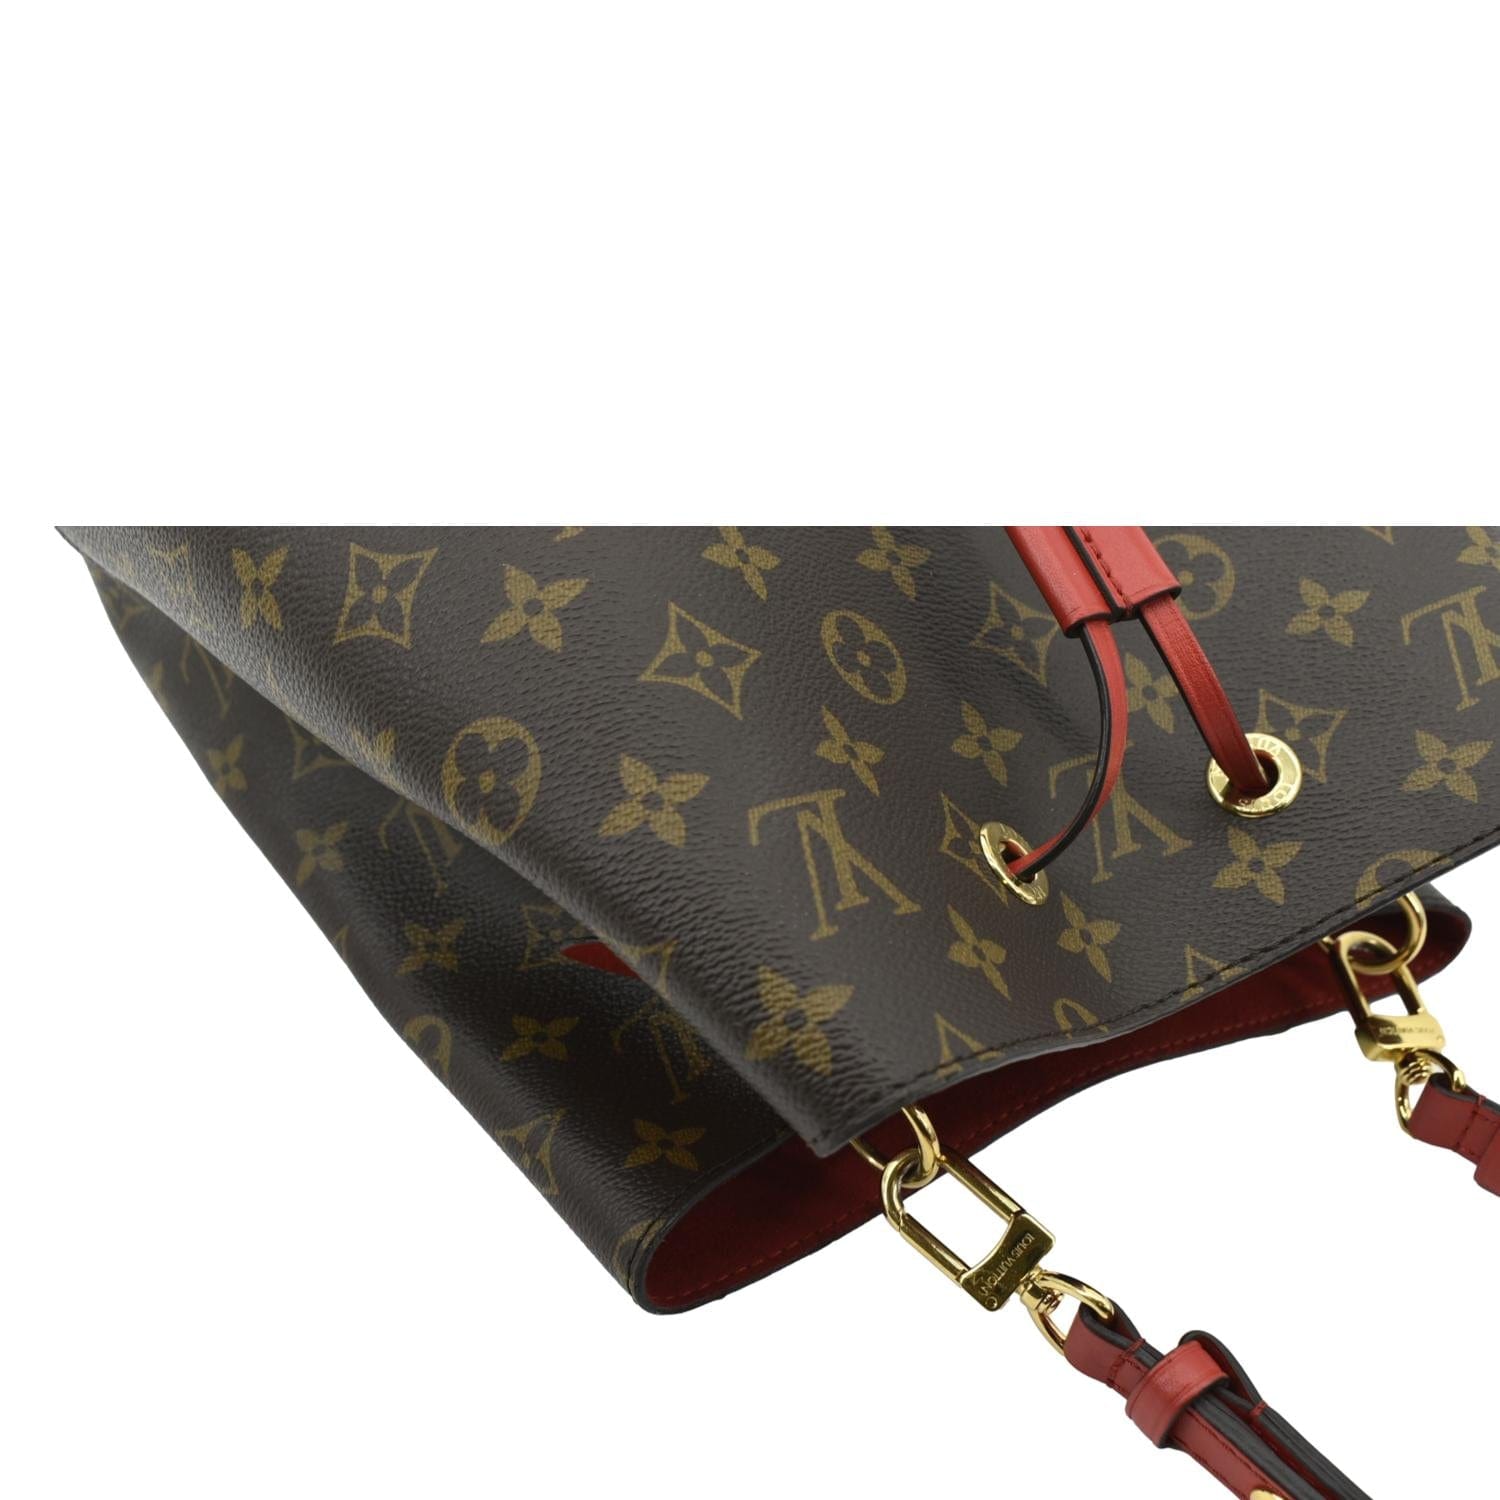 Louis Vuitton Neonoe Mm Rose Poudre Brown Monogram Canvas Shoulder Bag -  MyDesignerly